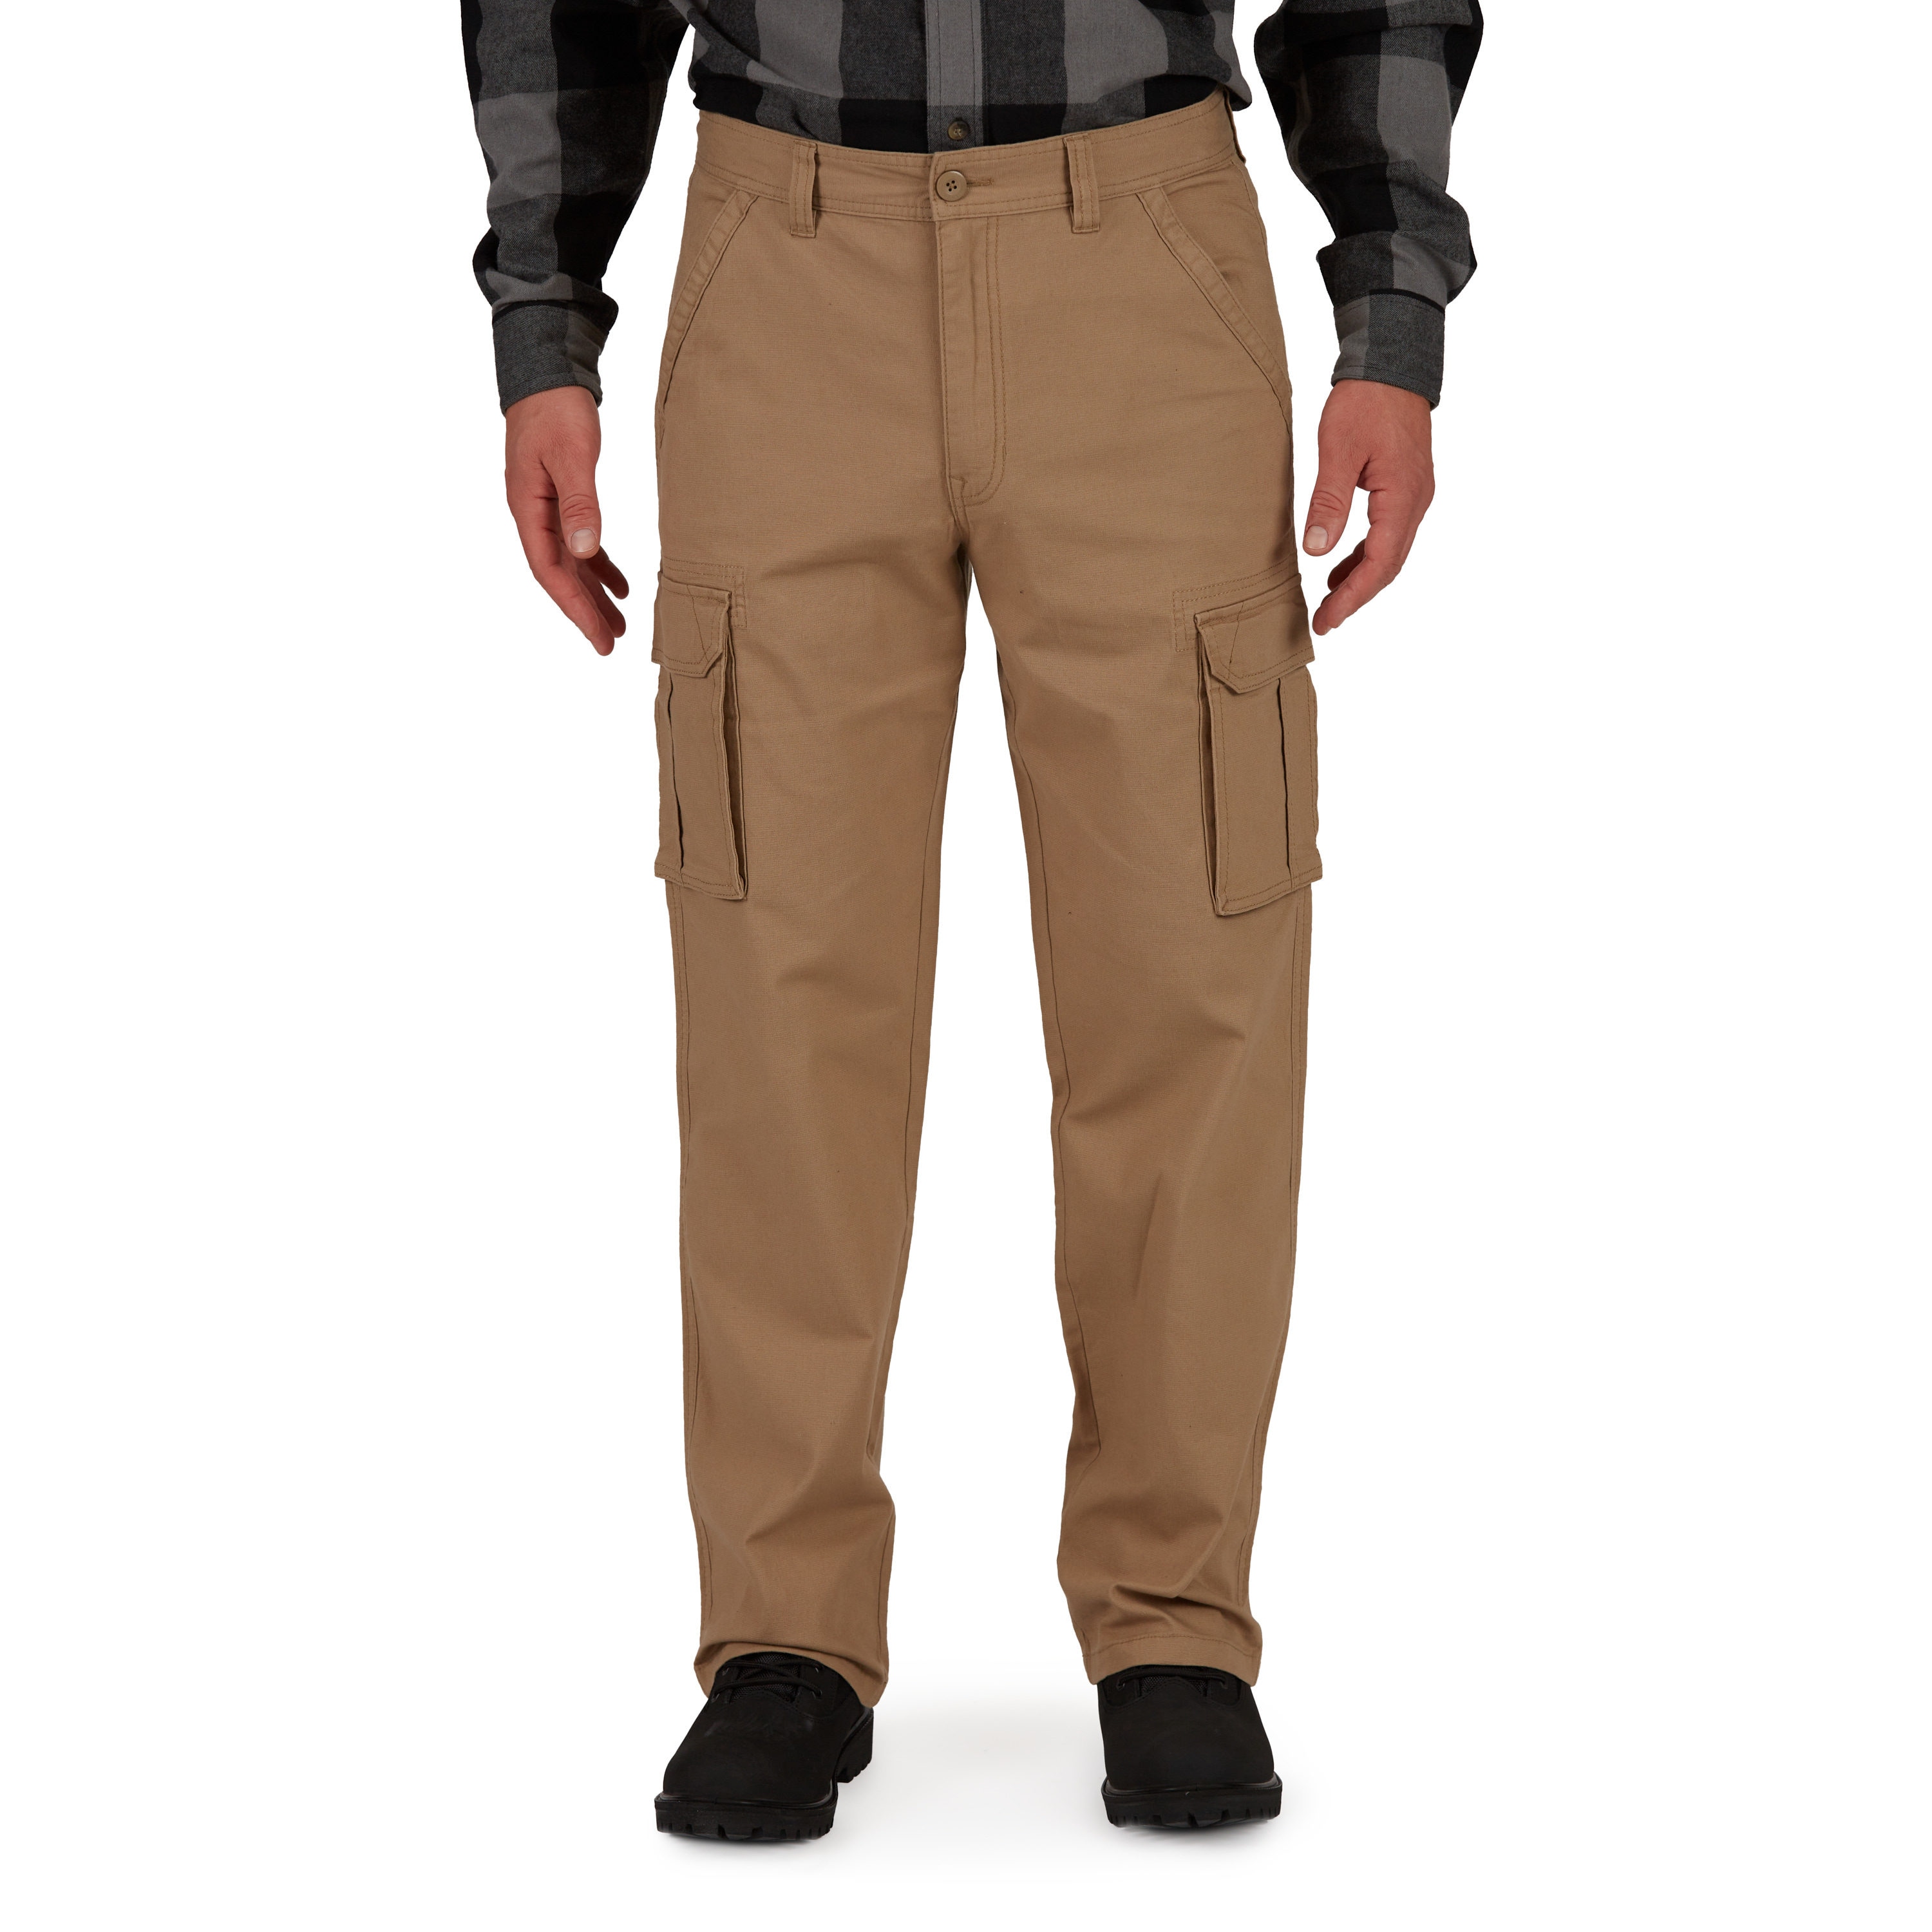 Wrangler Men's Relaxed Fit Flex Cargo Pants - Khaki 38x32